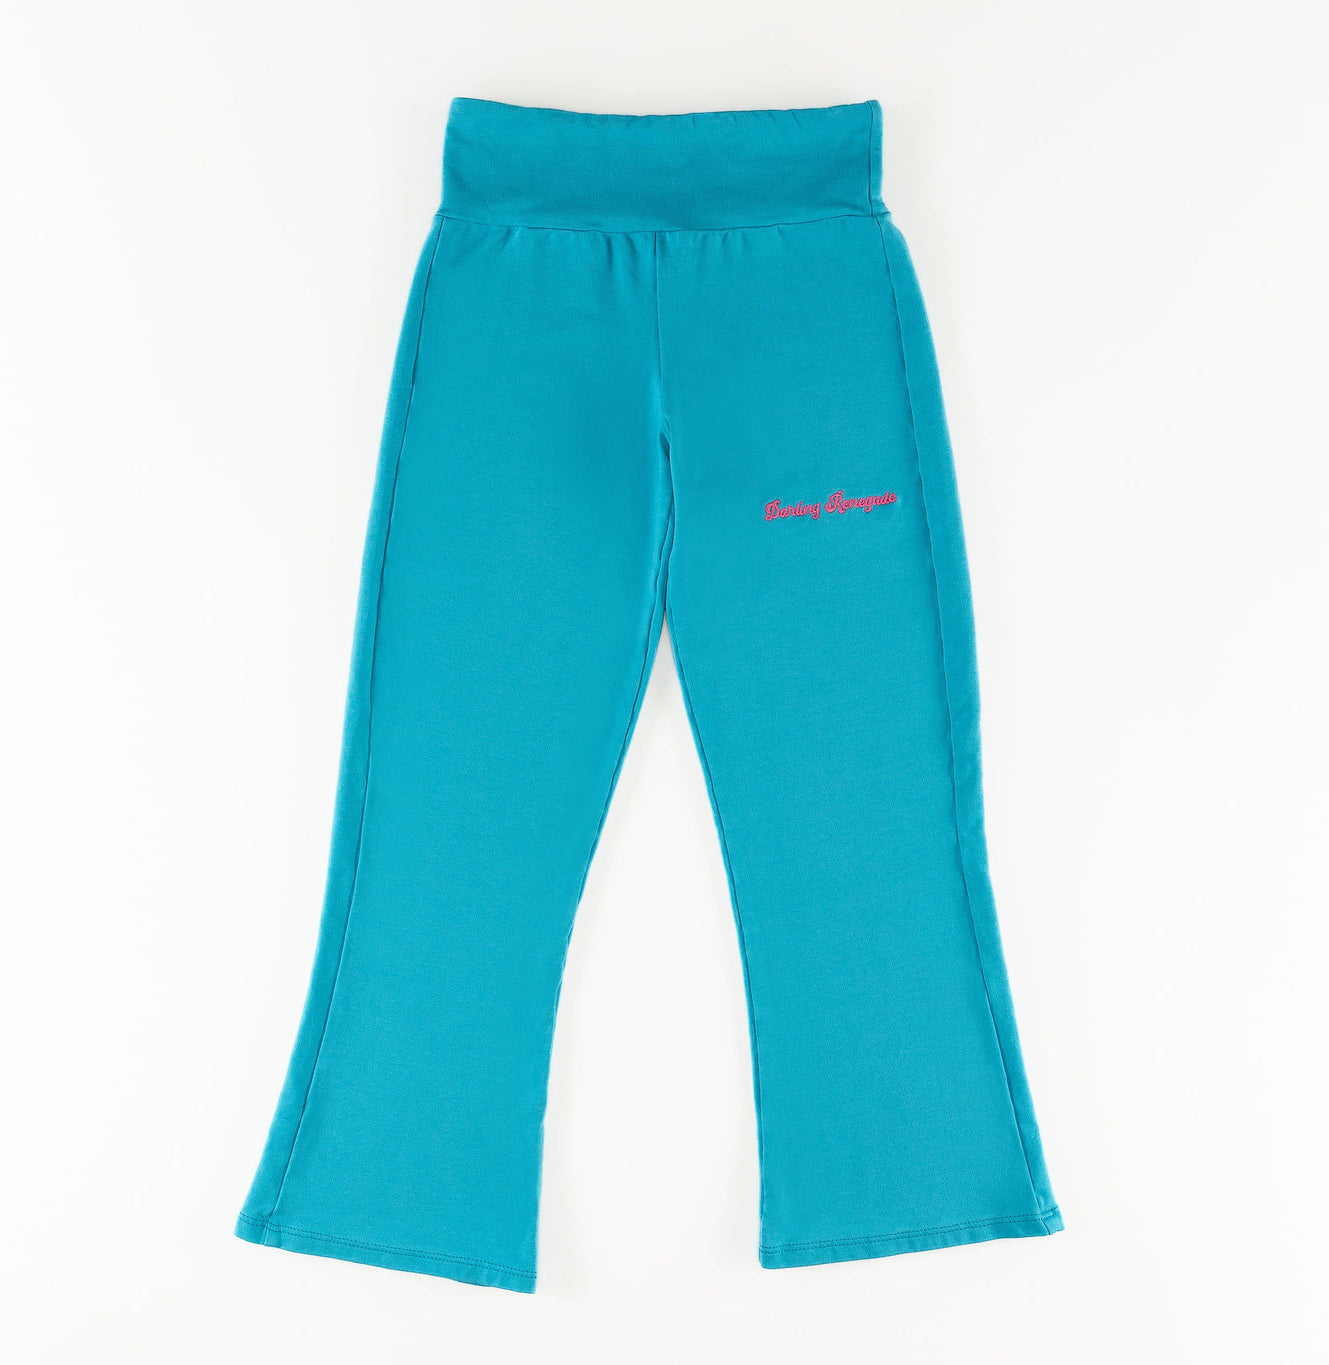 Signature Sweatpants in Blue/Pink